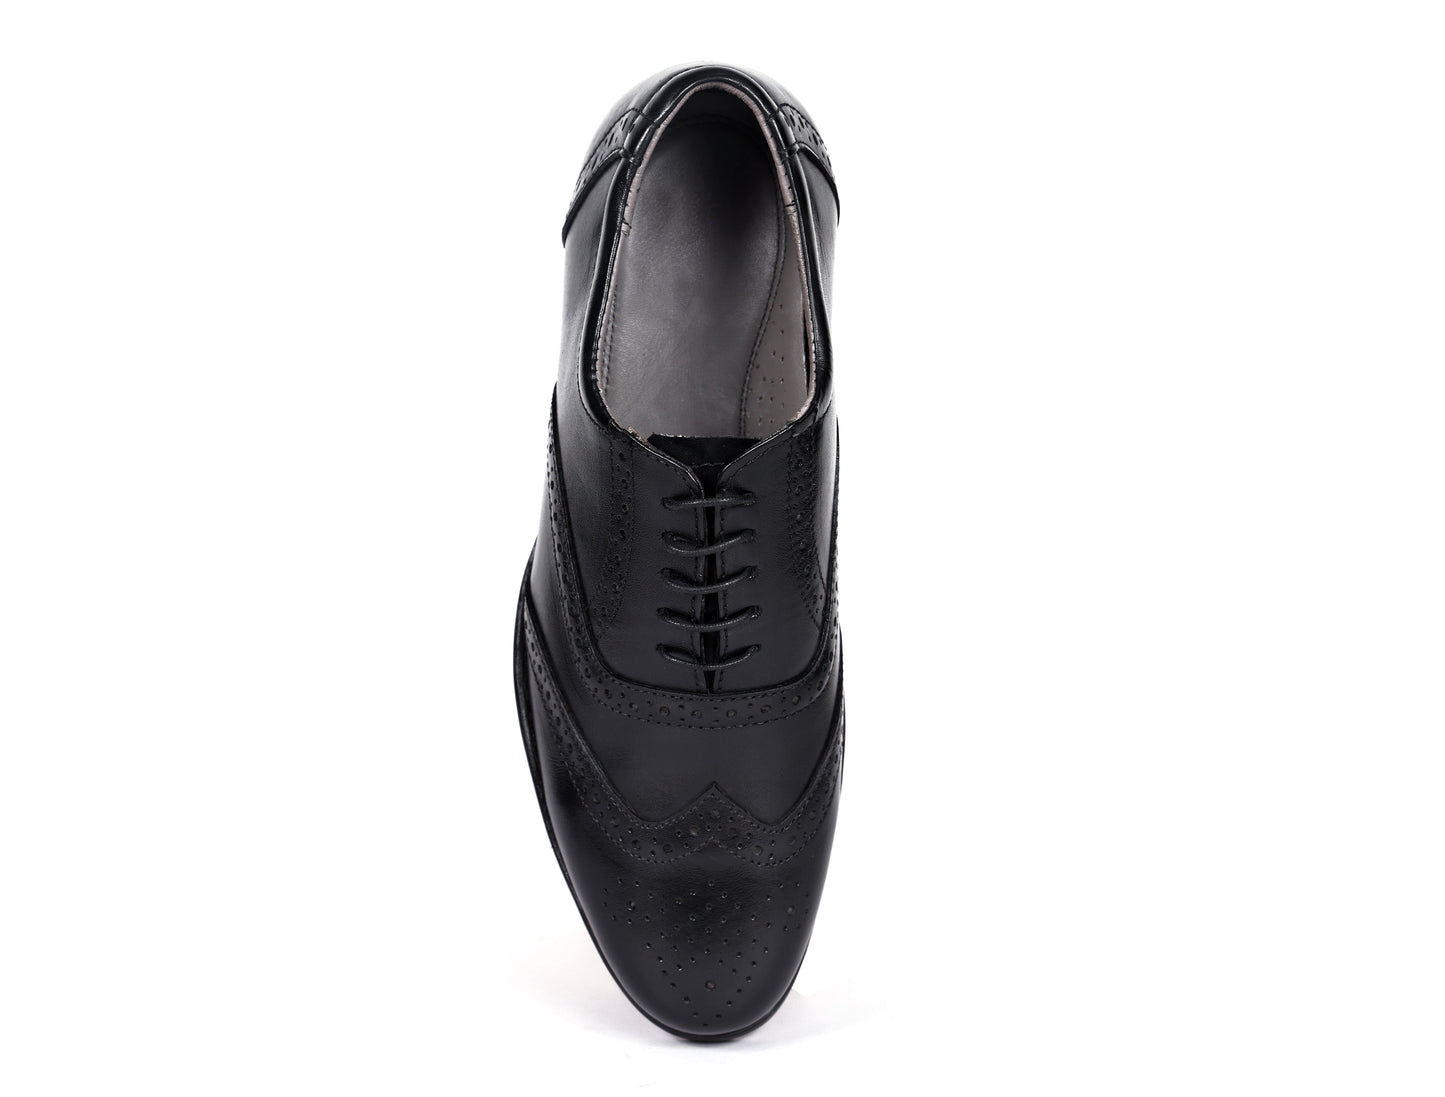 "Refined Elegance: Premium Black Formal Shoes" Art: LS-1105